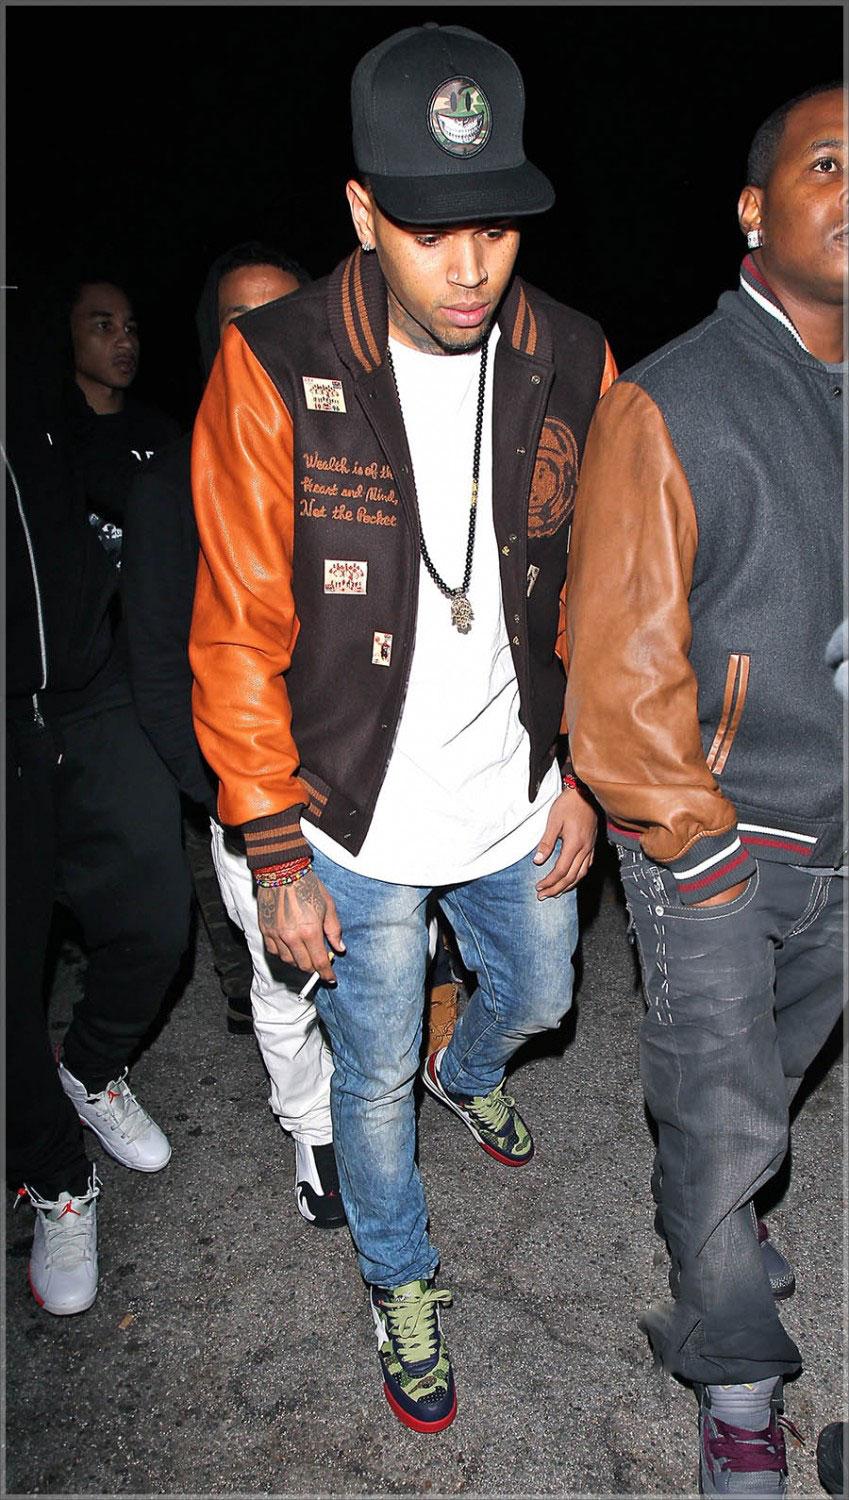 BAPE Man Logo - Men's Fashion Flash: Chris Brown's Supper Club Billionaire Boys Club